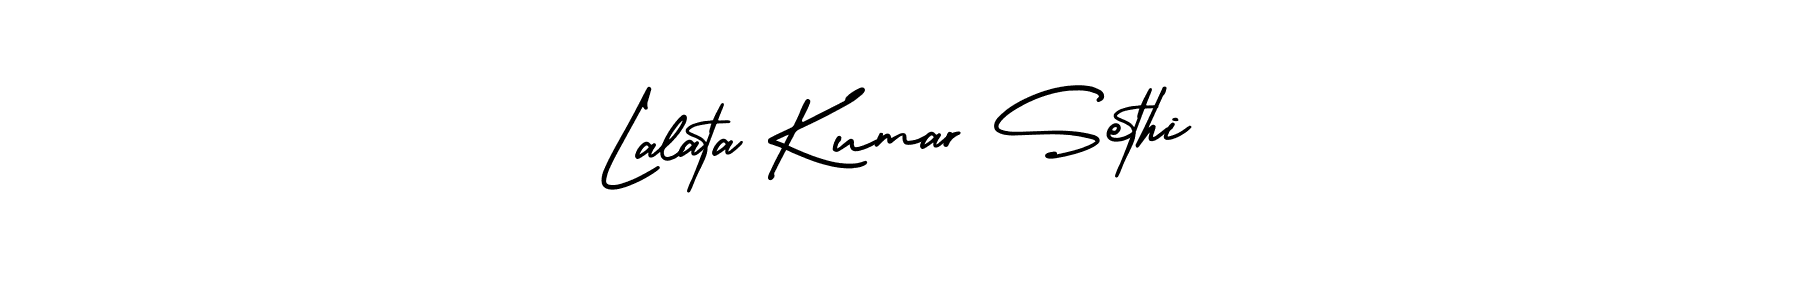 How to Draw Lalata Kumar Sethi signature style? AmerikaSignatureDemo-Regular is a latest design signature styles for name Lalata Kumar Sethi. Lalata Kumar Sethi signature style 3 images and pictures png